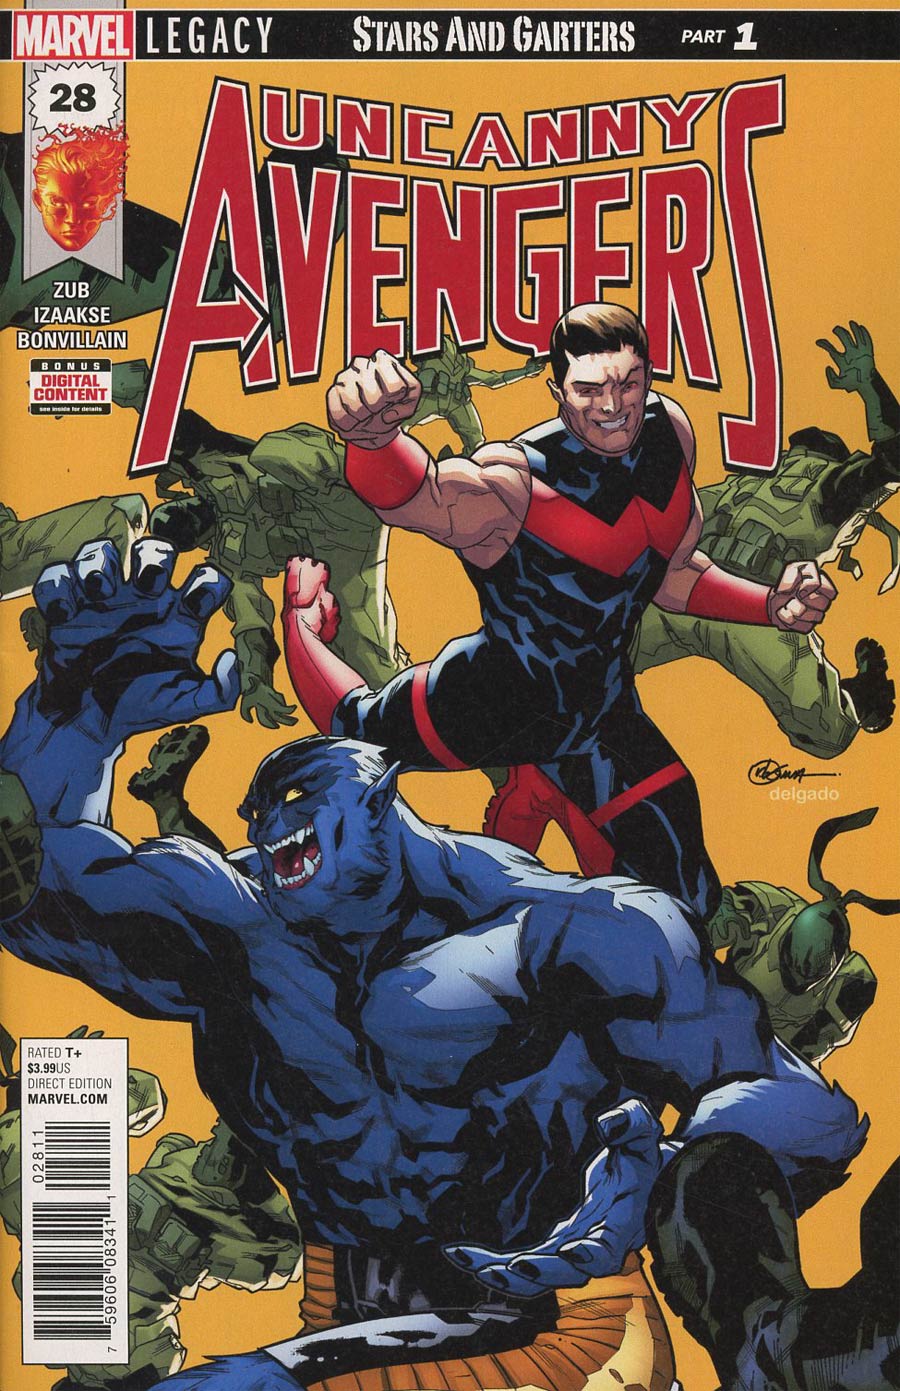 Uncanny Avengers Vol 3 #28 Cover A 1st Ptg Regular RB Silva Cover (Marvel Legacy Tie-In)